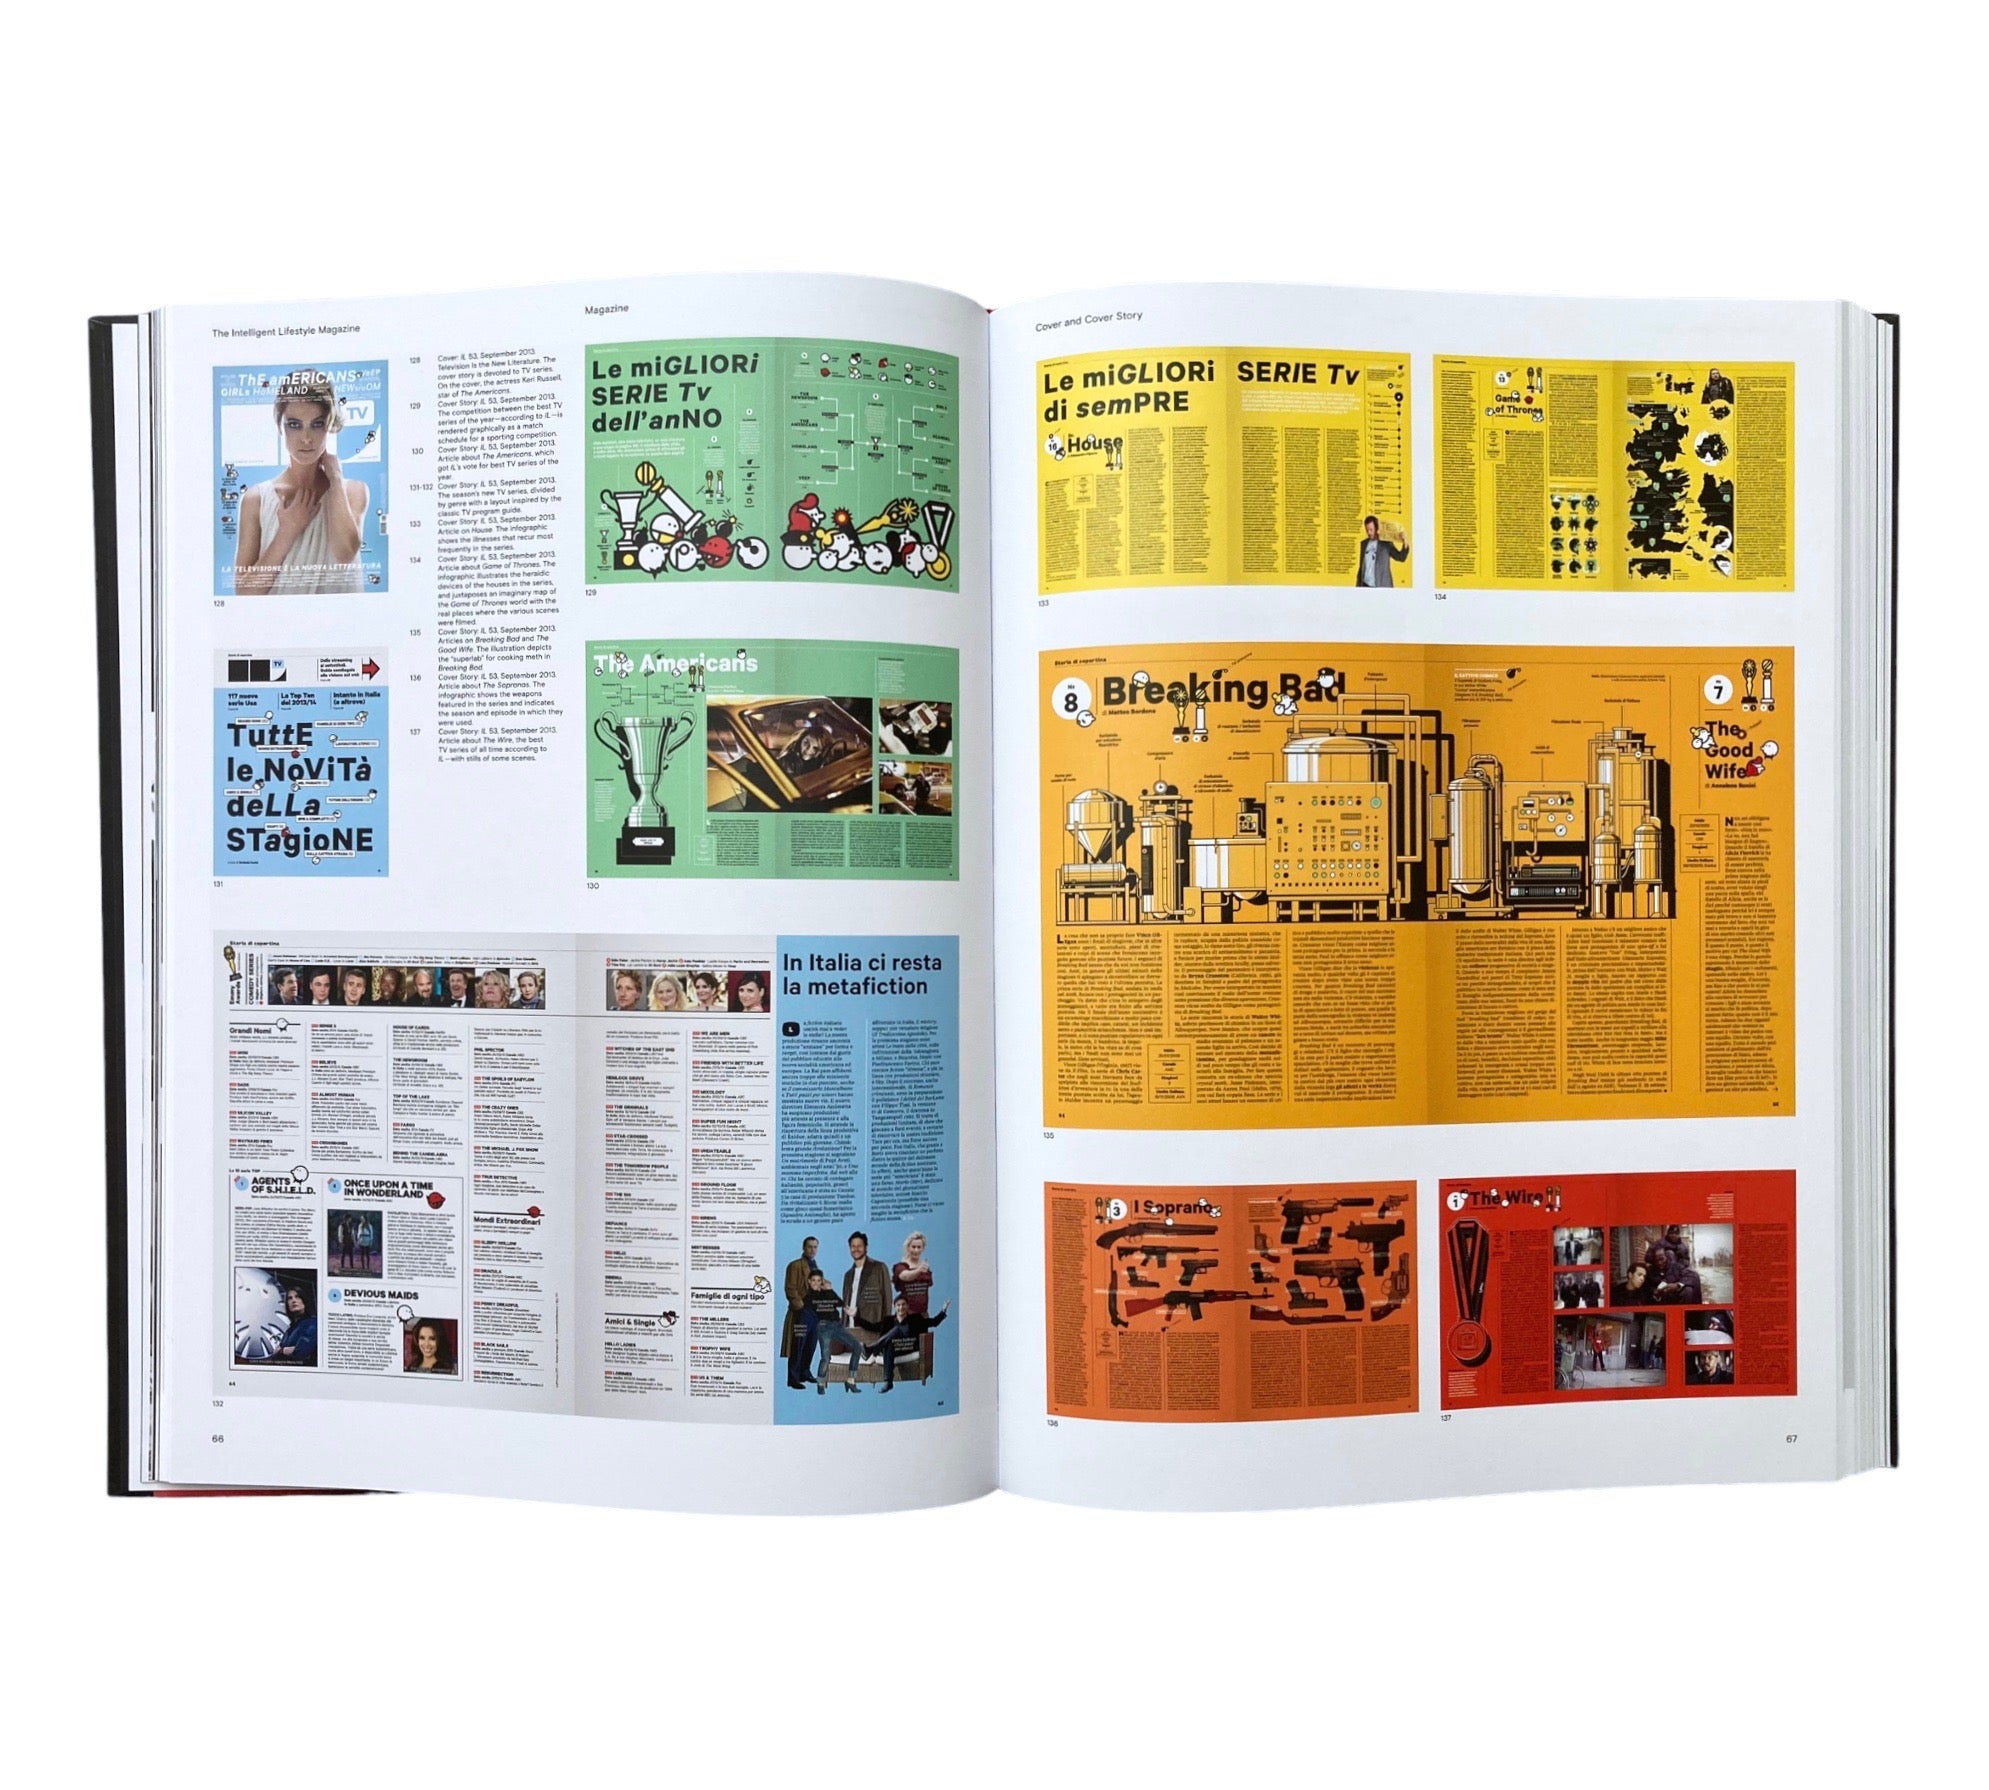 The Intelligent Lifestyle Magazine: Smart Editorial Design, Storytelling and Journalism